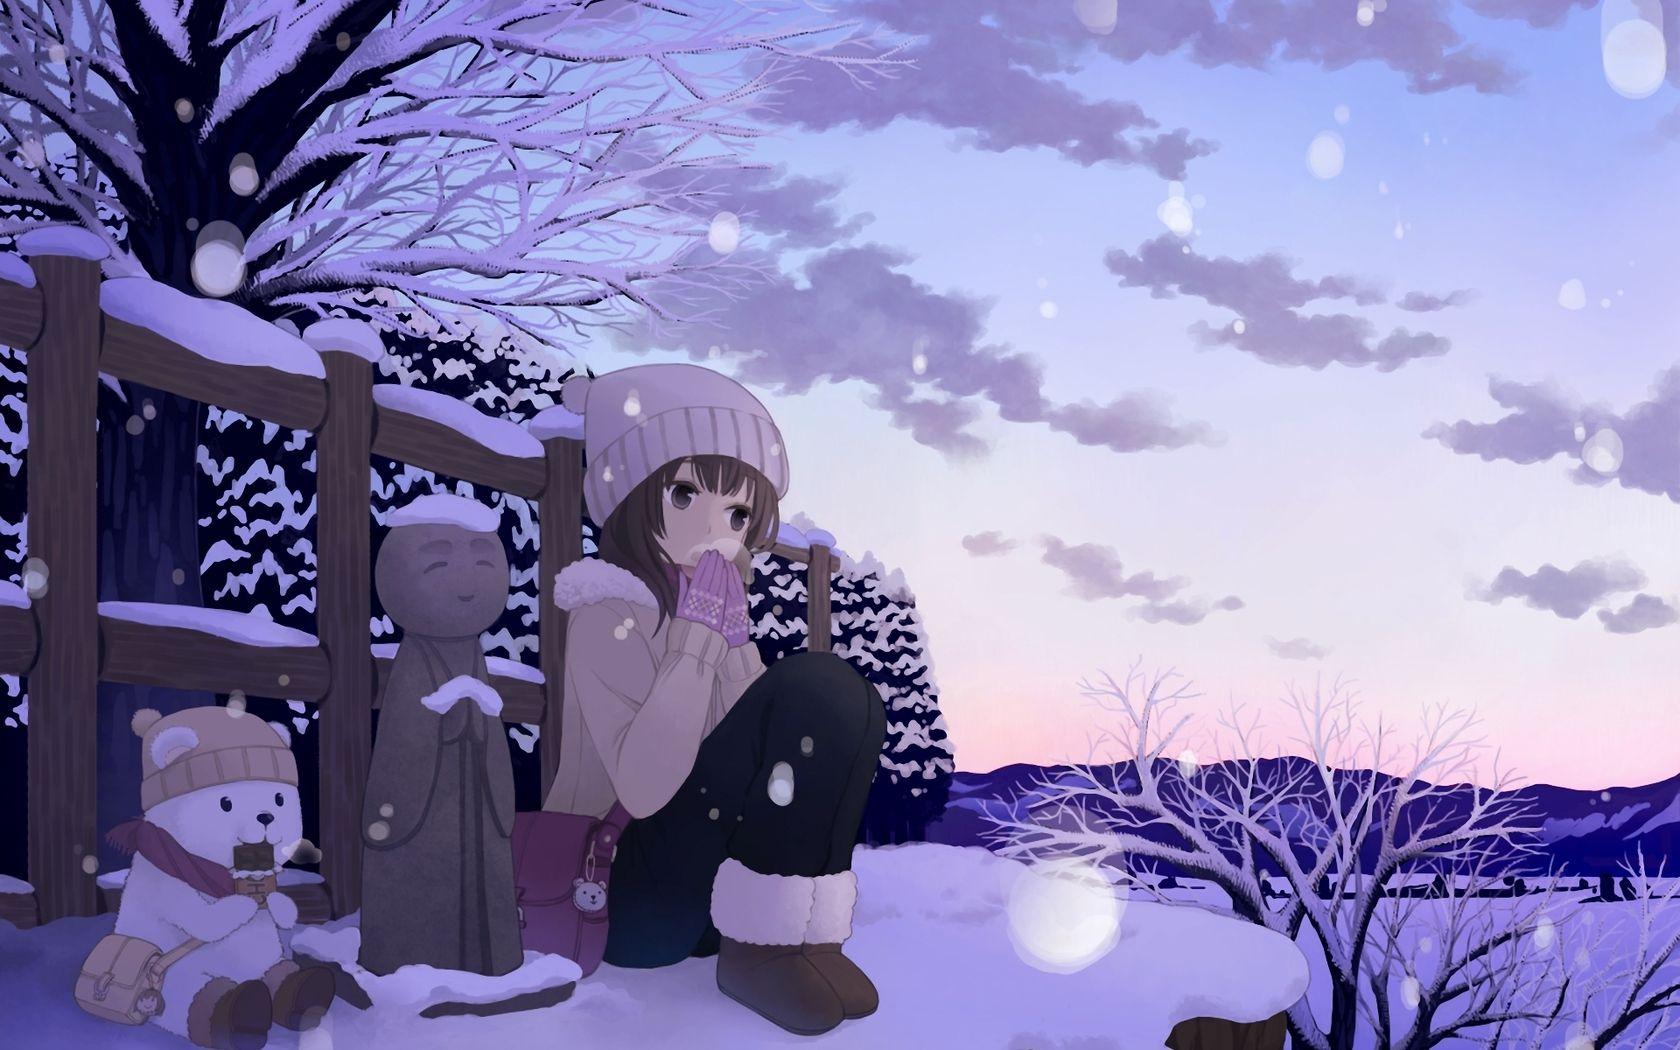 Anime Winter Wallpaper 42573 1680x1050 px. Anime art beautiful, Winter wallpaper hd, Winter wallpaper